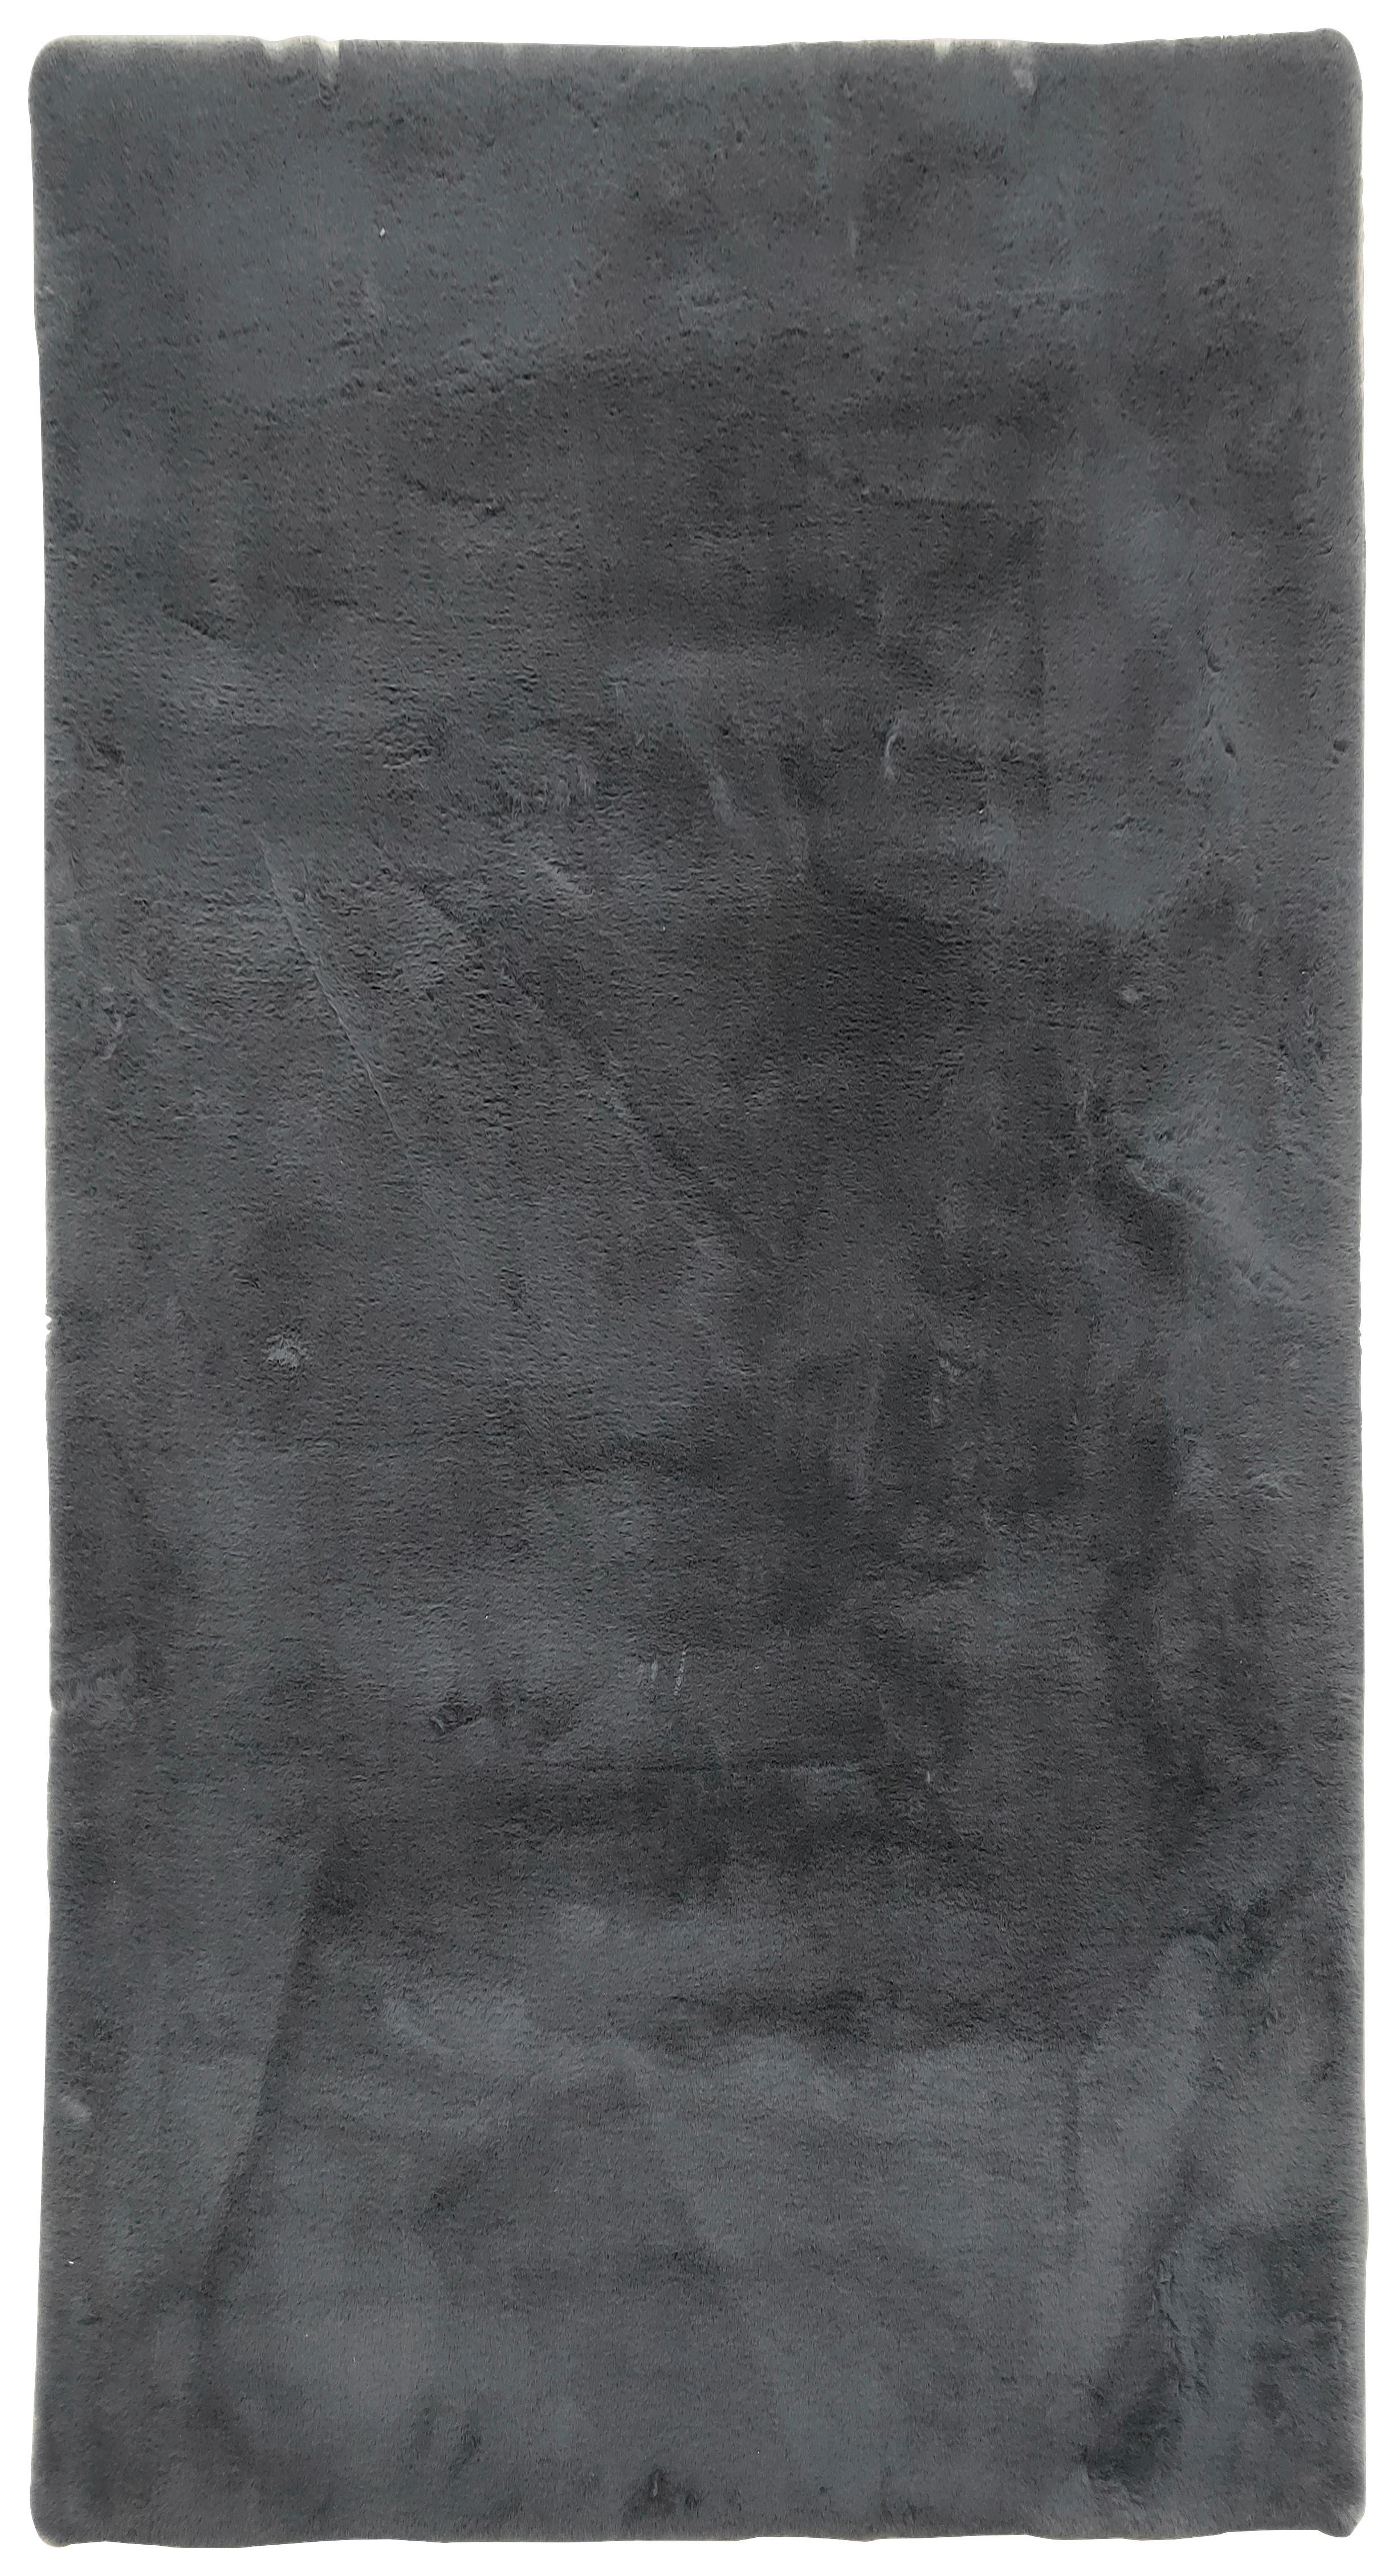 Umelá Kožušina Caroline 1, 80/150cm, Antracit - antracitová, textil (80/150cm) - Modern Living